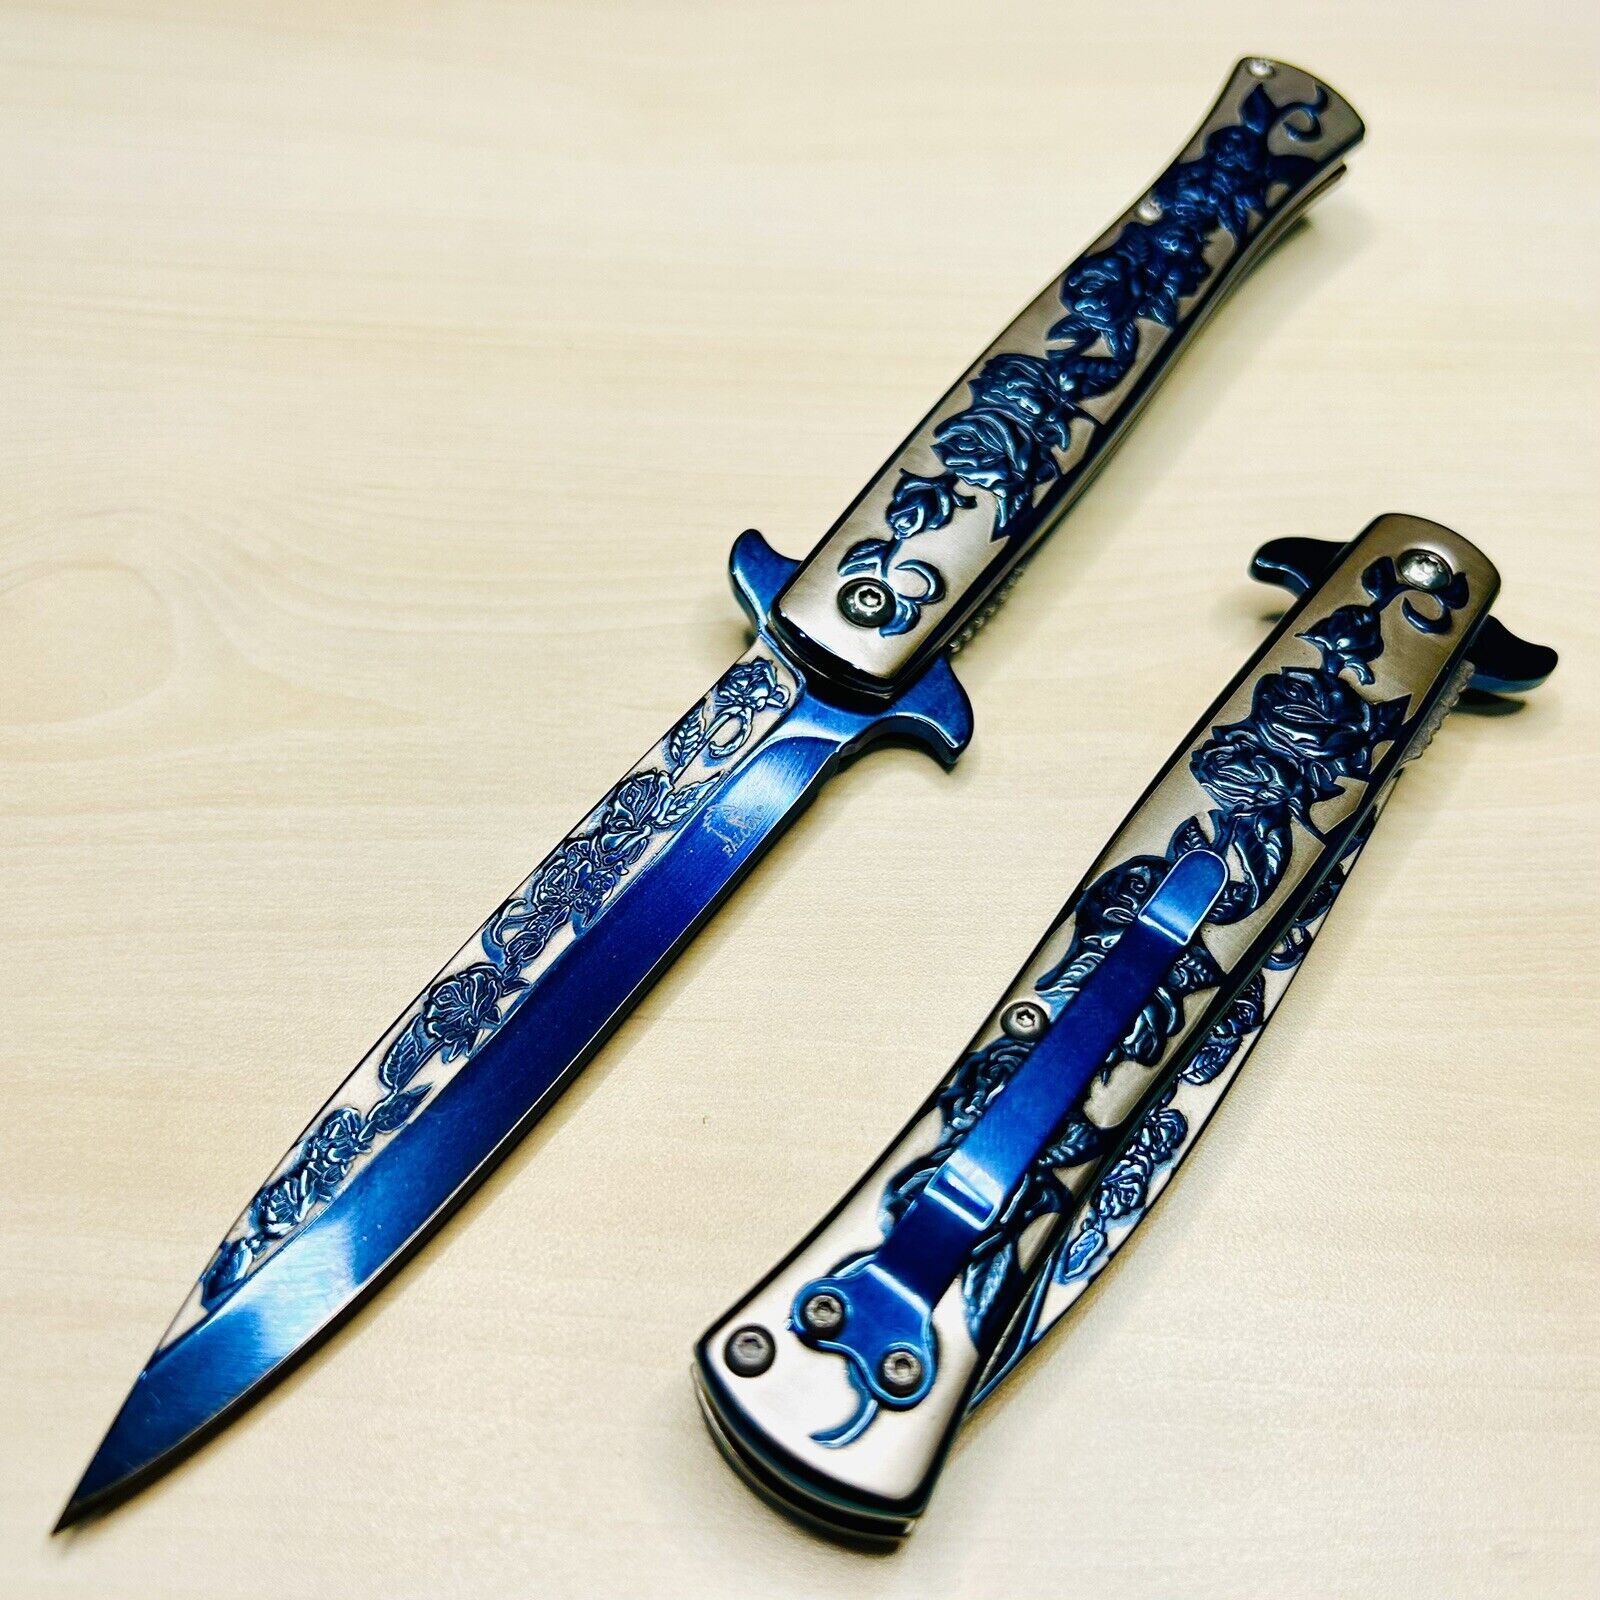 9” Blue Ross Knife Tactical Spring Assisted Open Blade Folding Pocket Knife